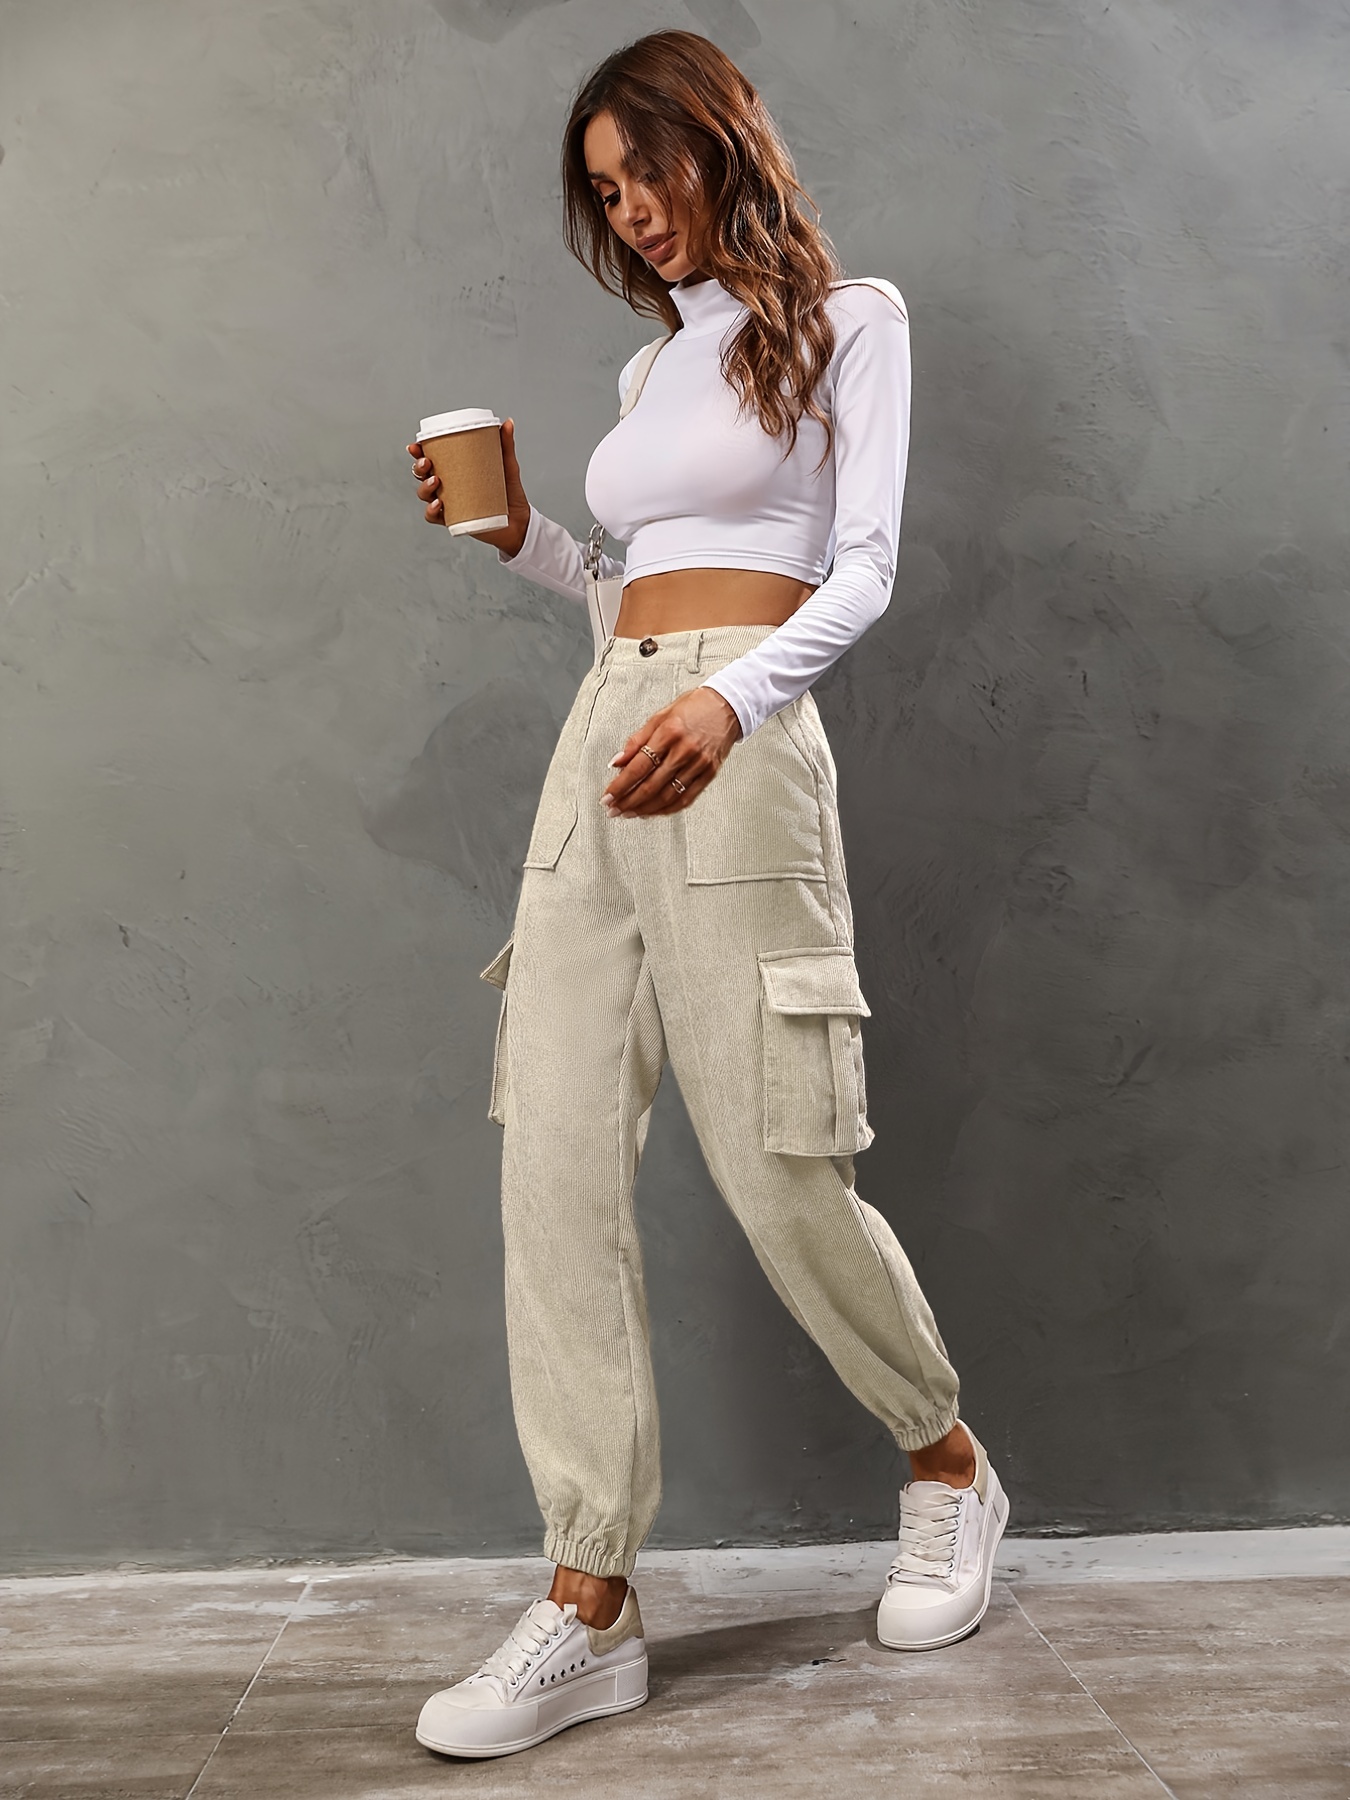 Pantalones Pantalones elegantes para mujer Pantalones casuales de verano  Bolsillos Traje de trabajo de oficina (Caqui L) Ygjytge Caqui T L para Mujer